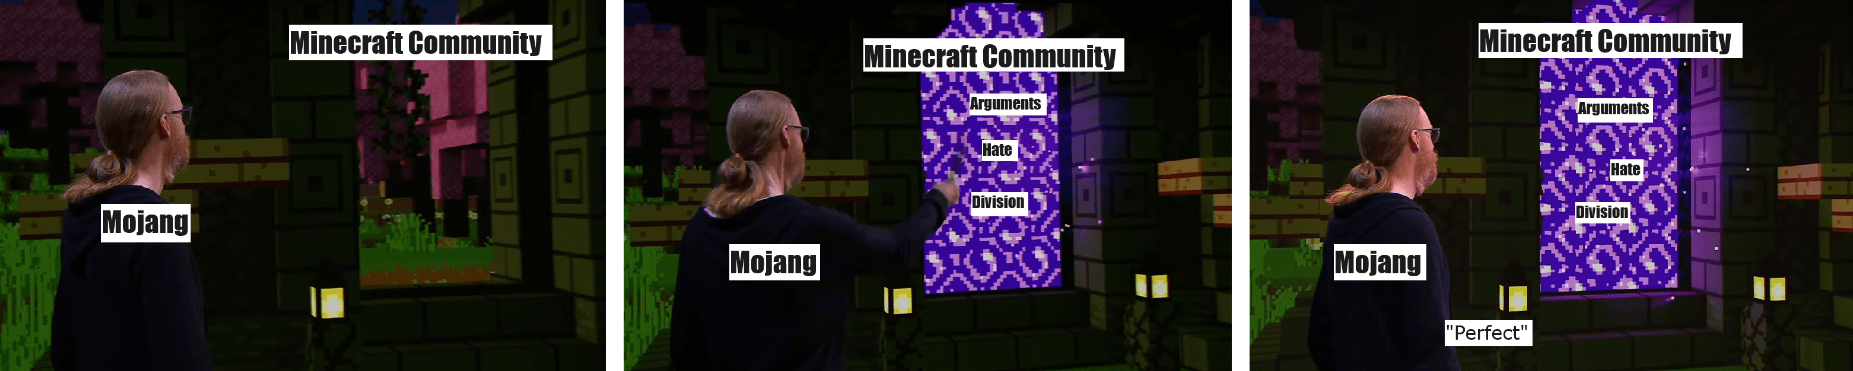 Minecraft Memes - Hope you like my paint meme.